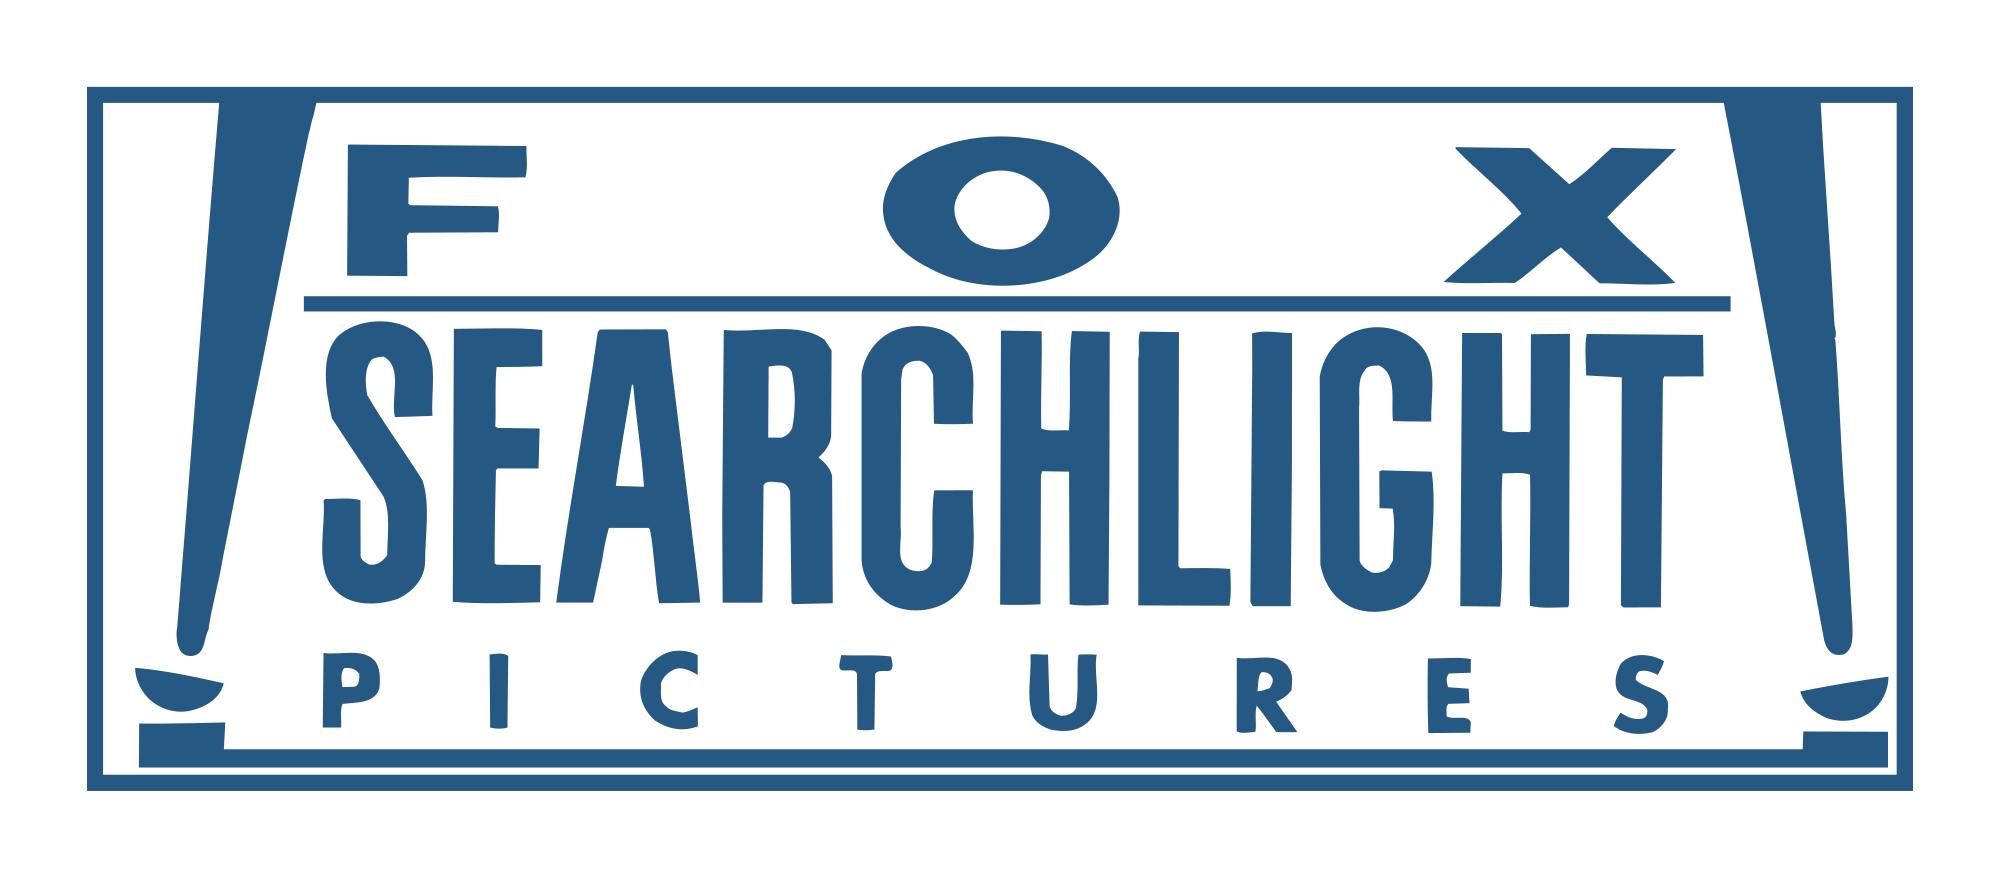 Fox searchlight. Fox Searchlight pictures. Searchlight pictures. Searchlight pictures логотип.